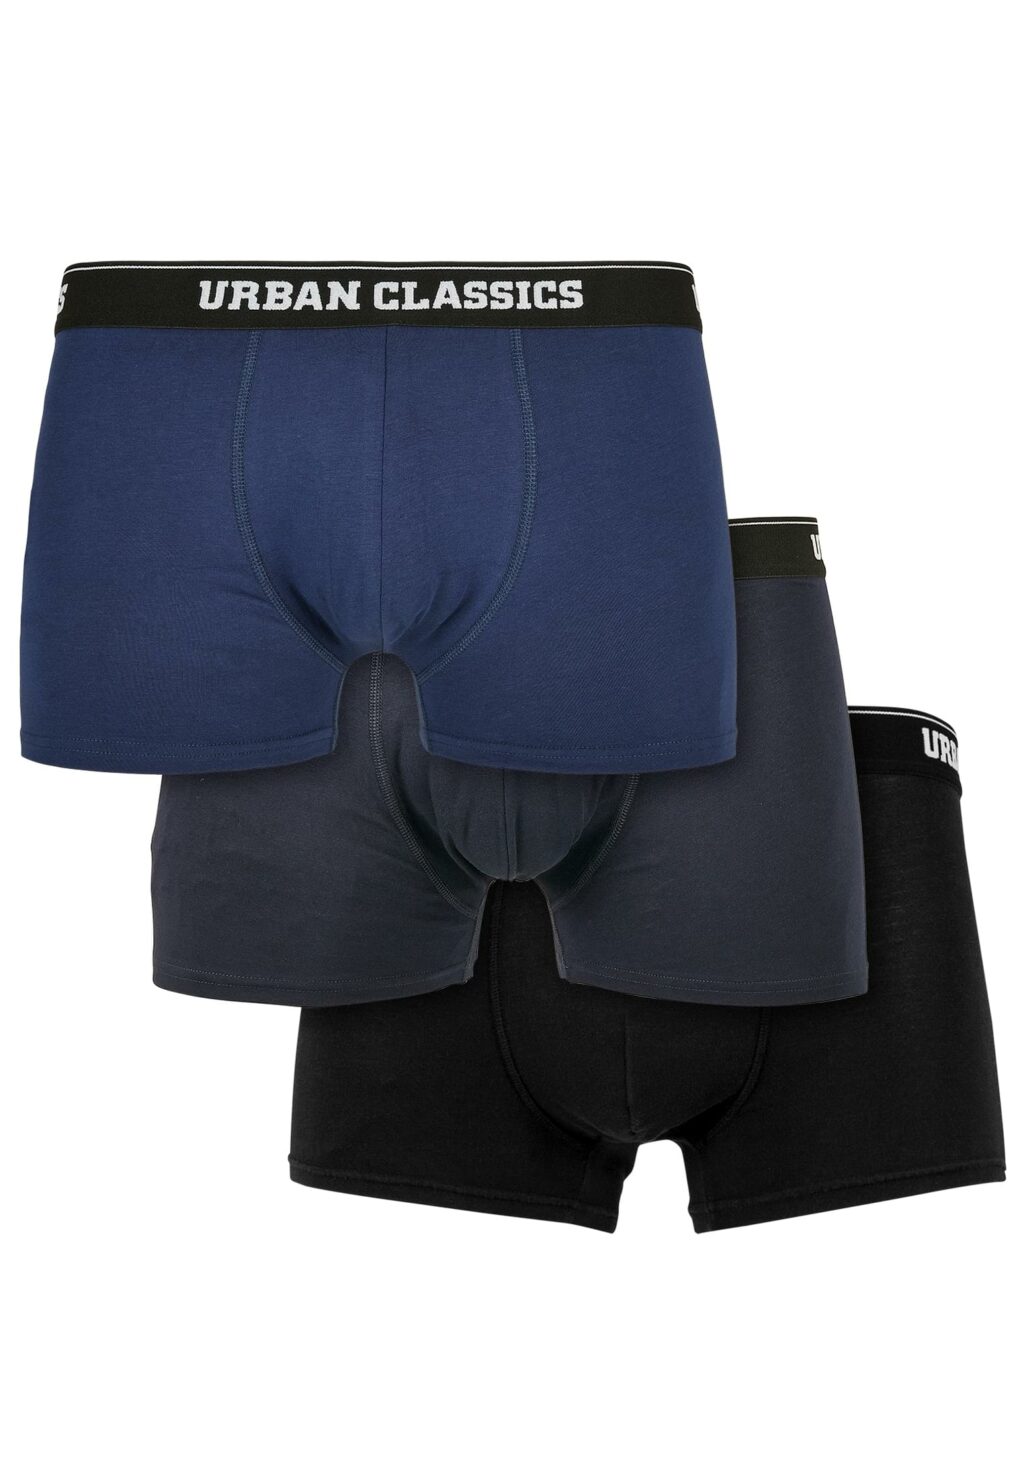 Urban Classics Organic Boxer Shorts 3-Pack darkblue+navy+black TB3838